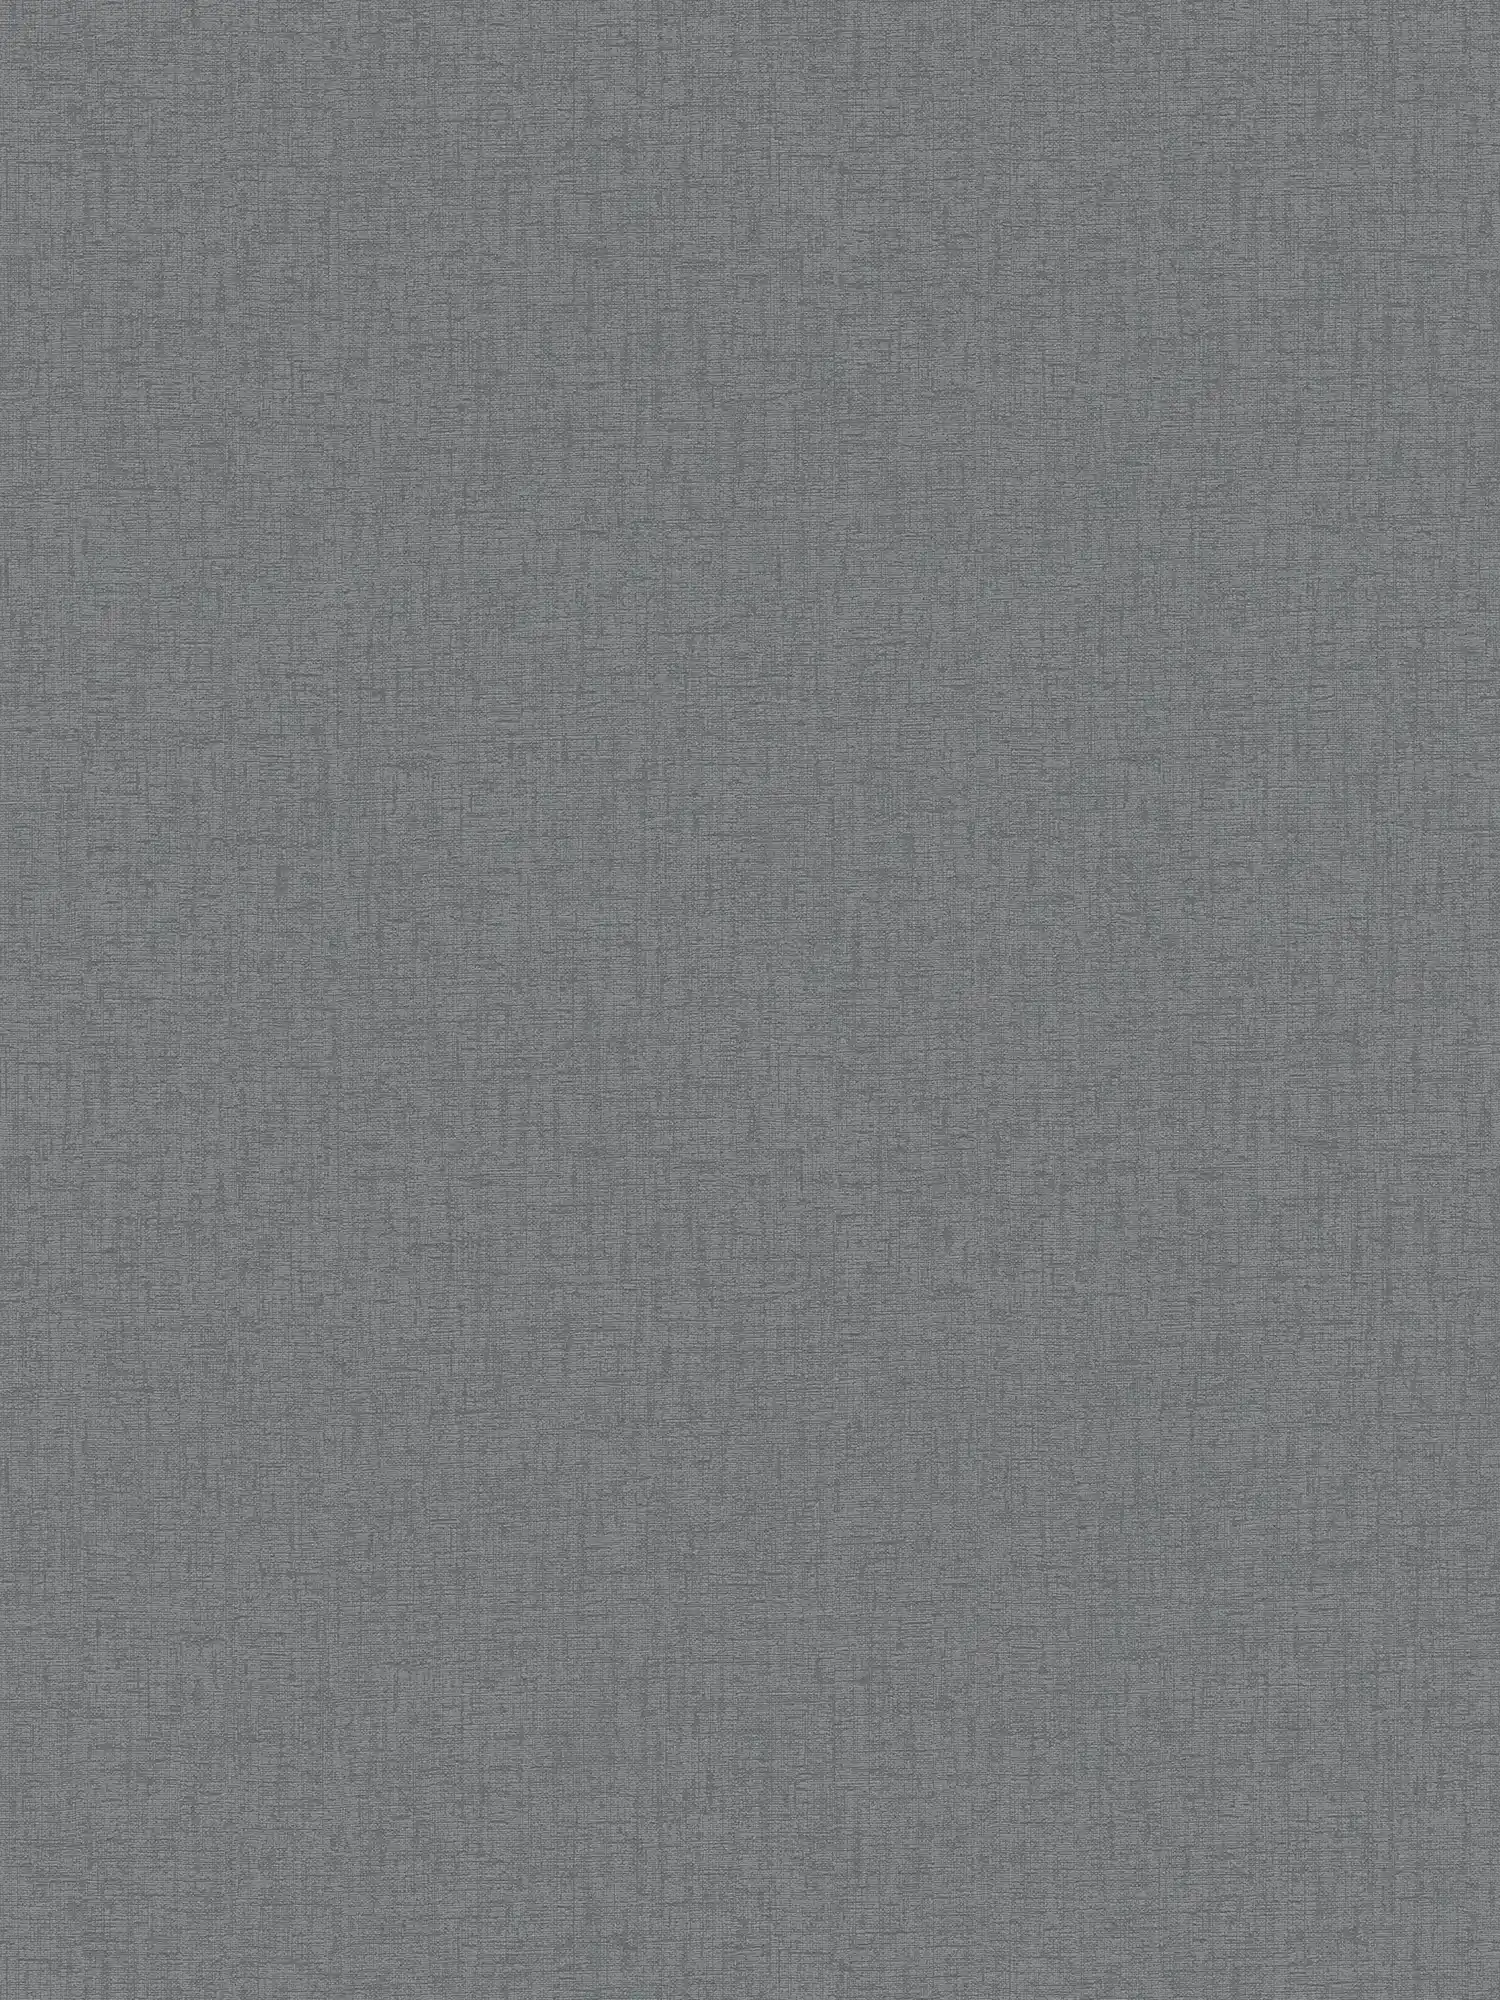 Single-coloured non-woven wallpaper with textile texture - anthracite, grey
